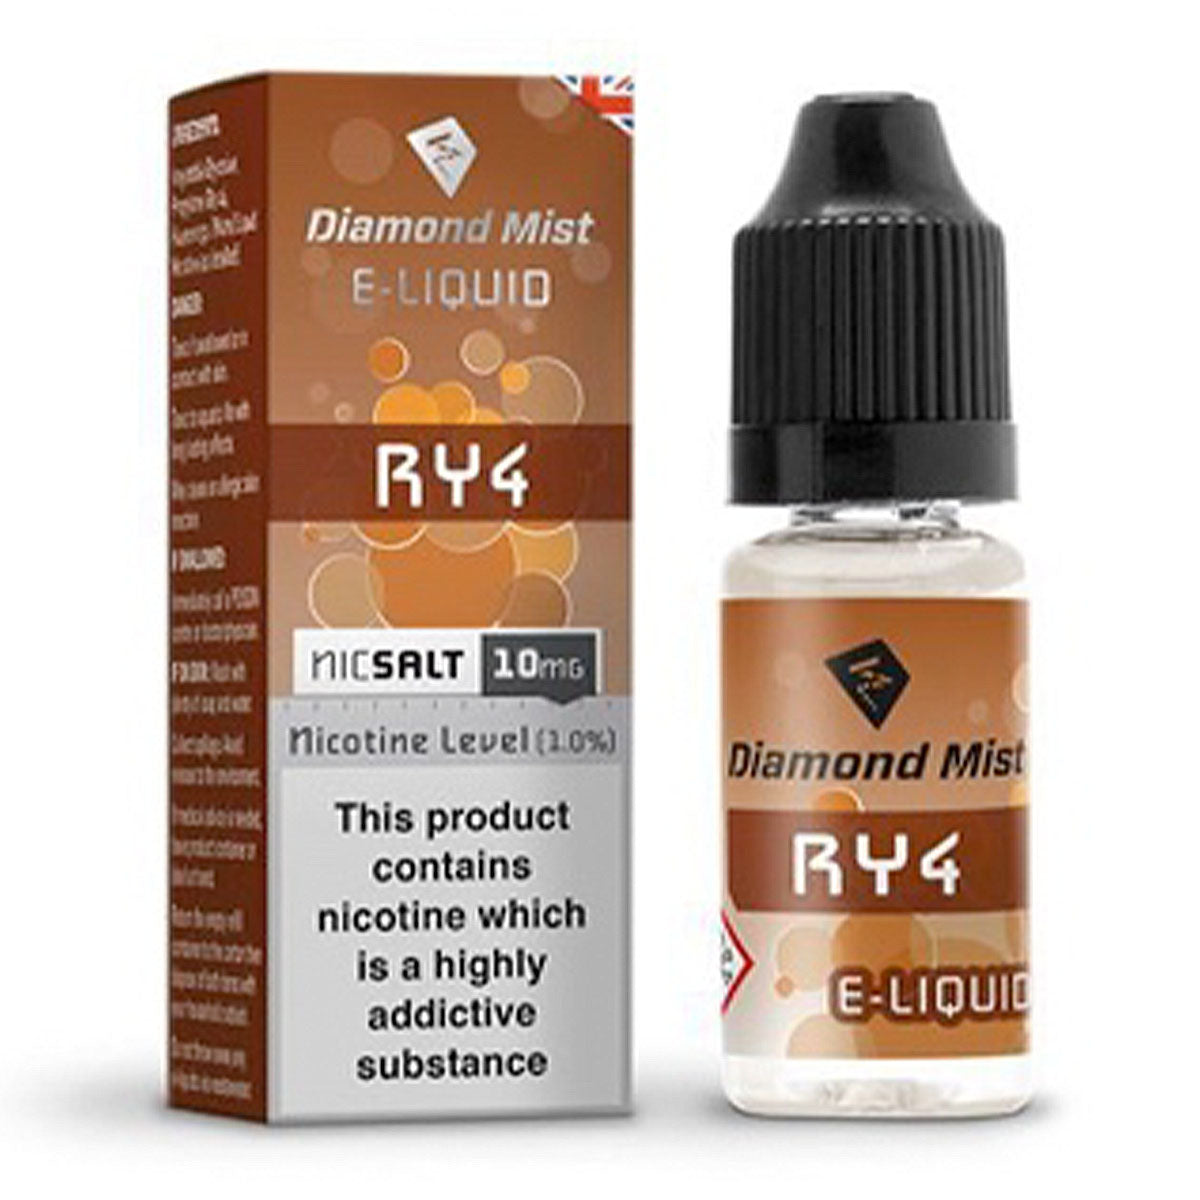 RY4 10ml Nicotine Salt by Diamond Mist